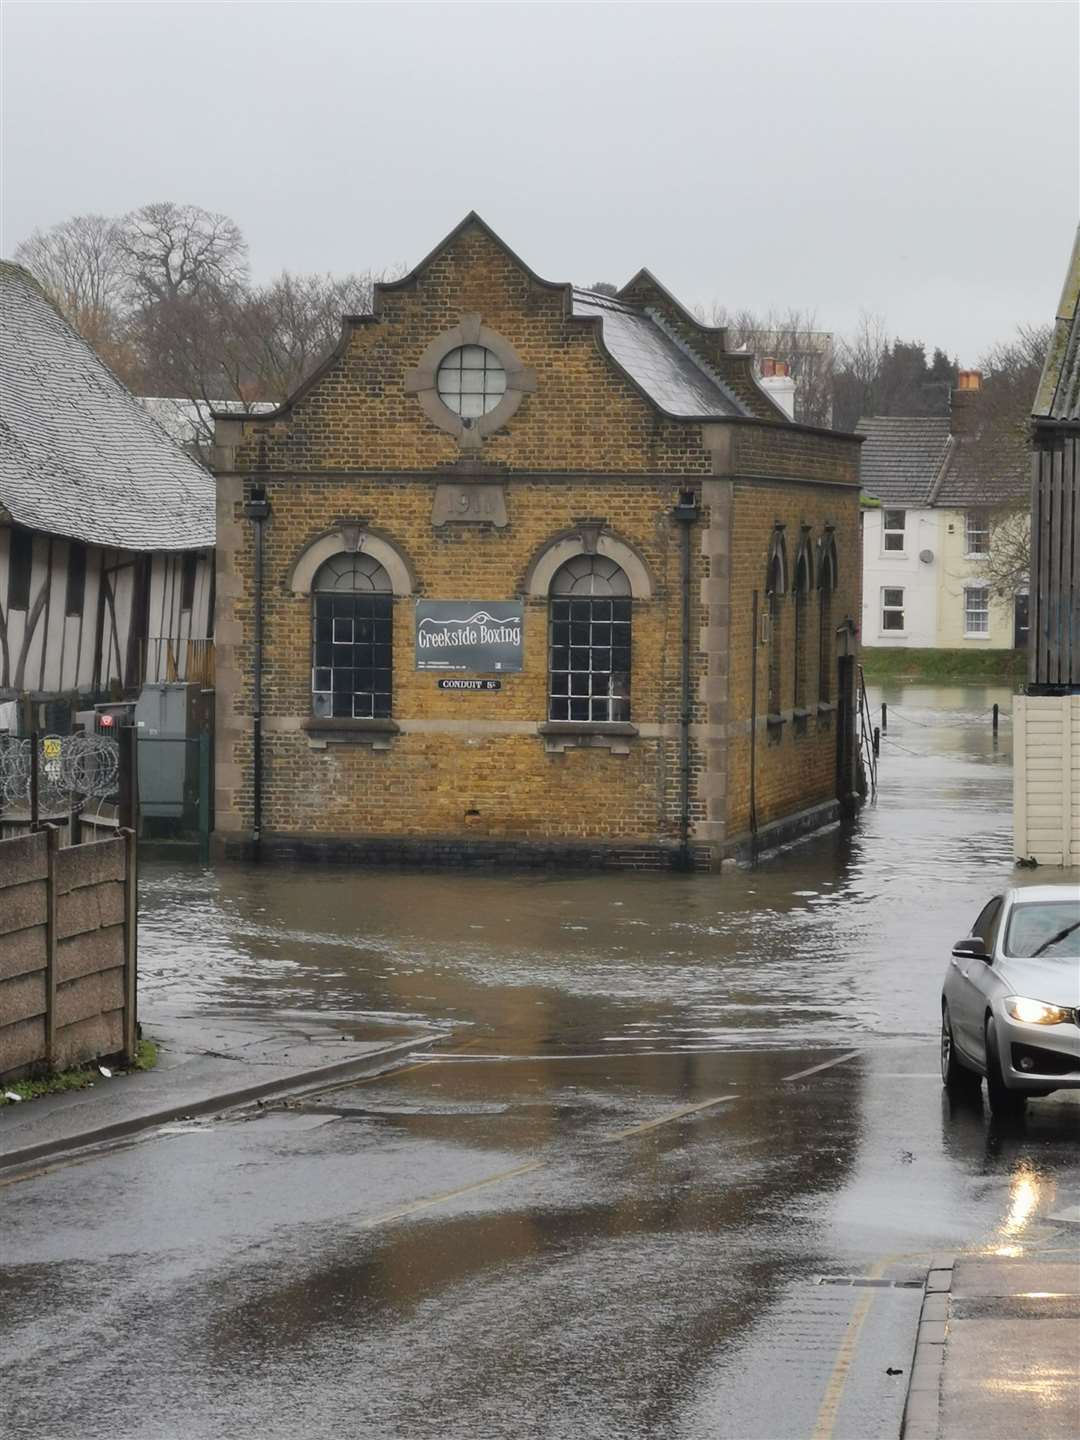 When Faversham Creek burst its banks